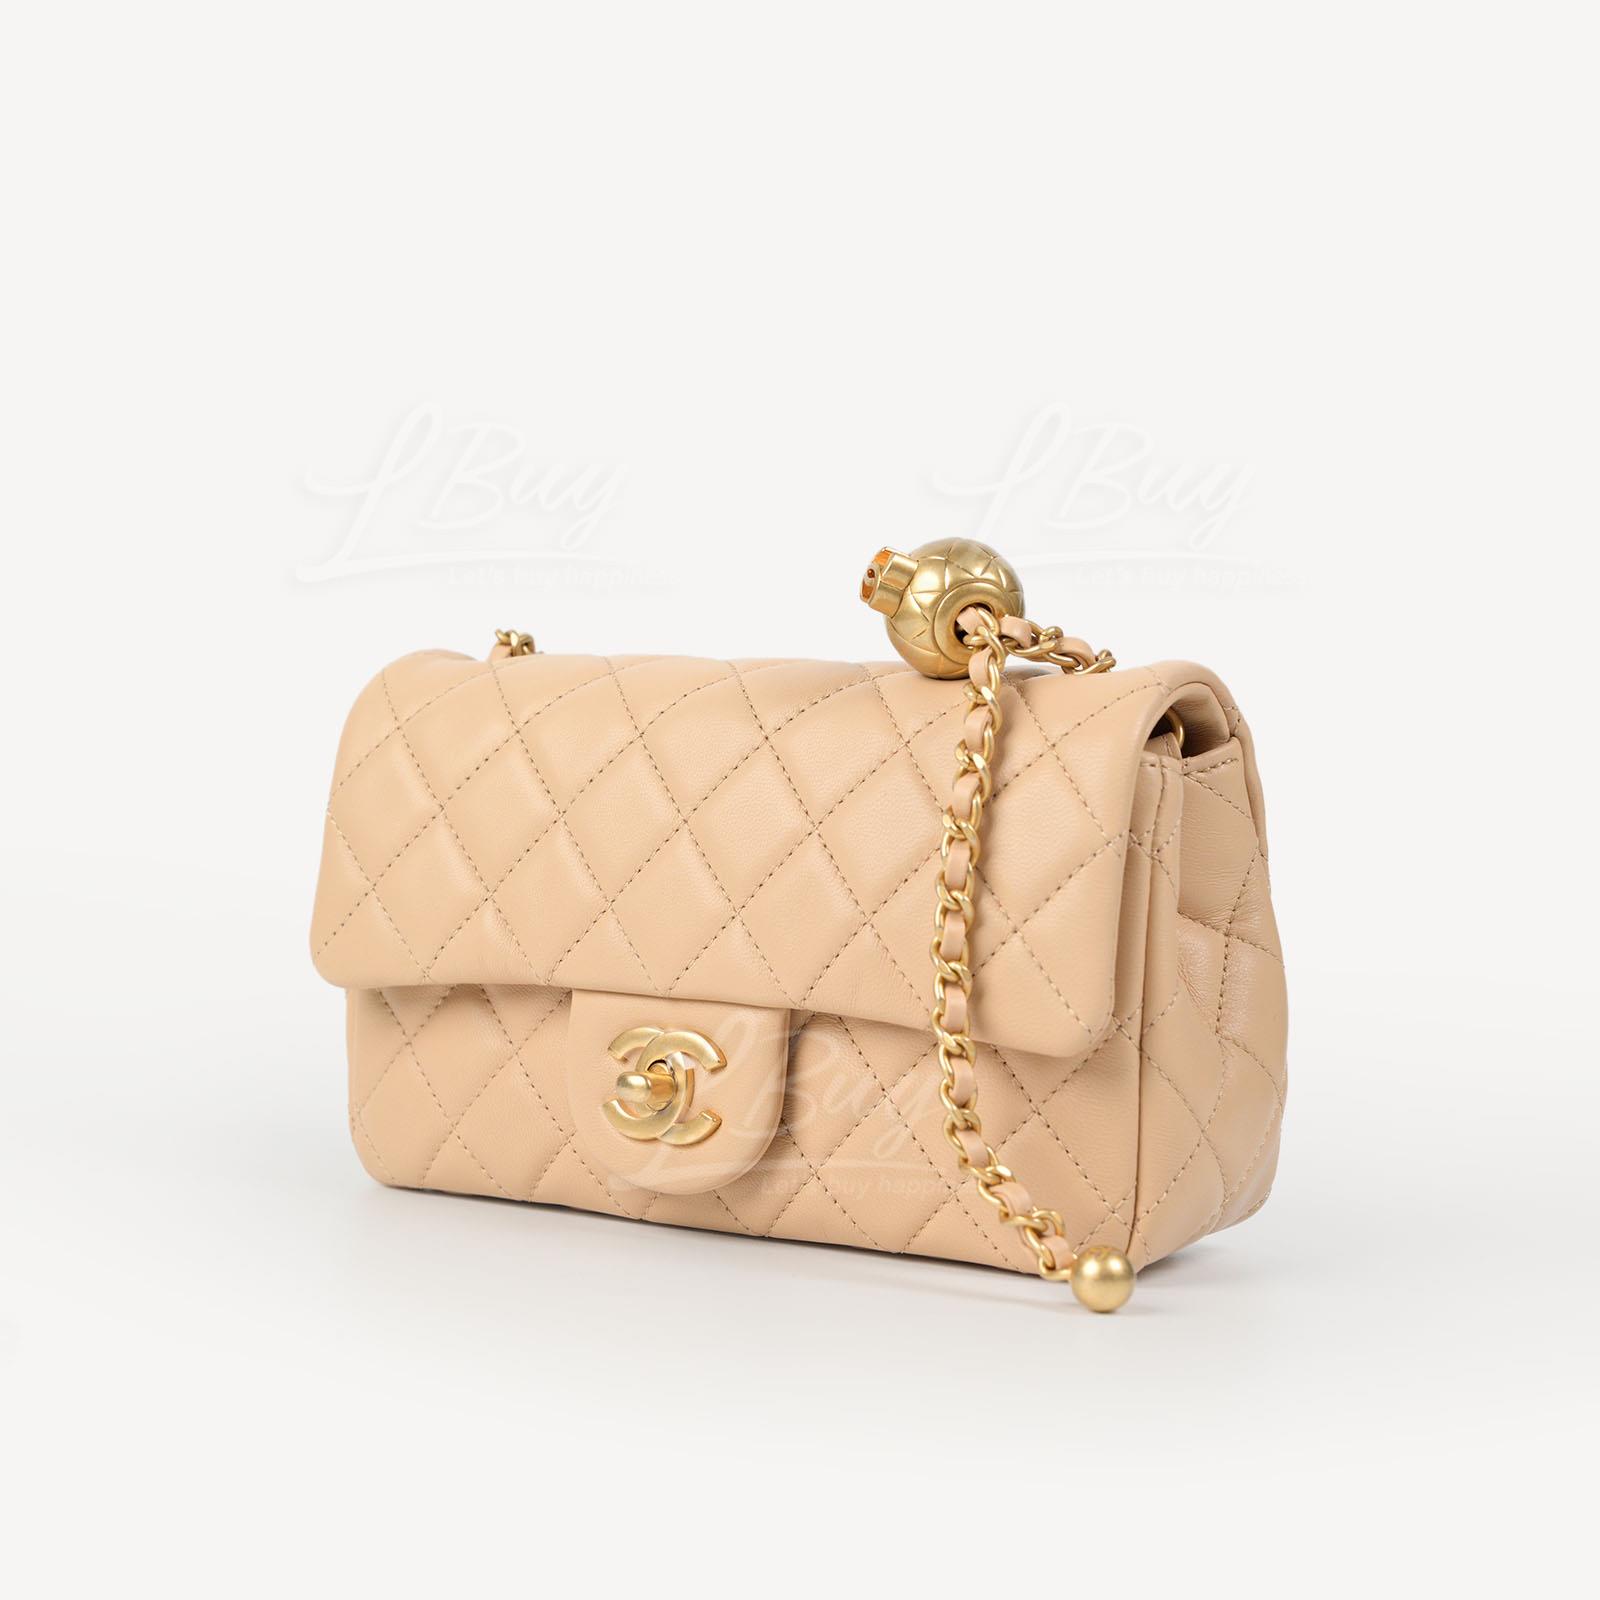 CHANEL-Chanel Flap Bag Beige 20cm